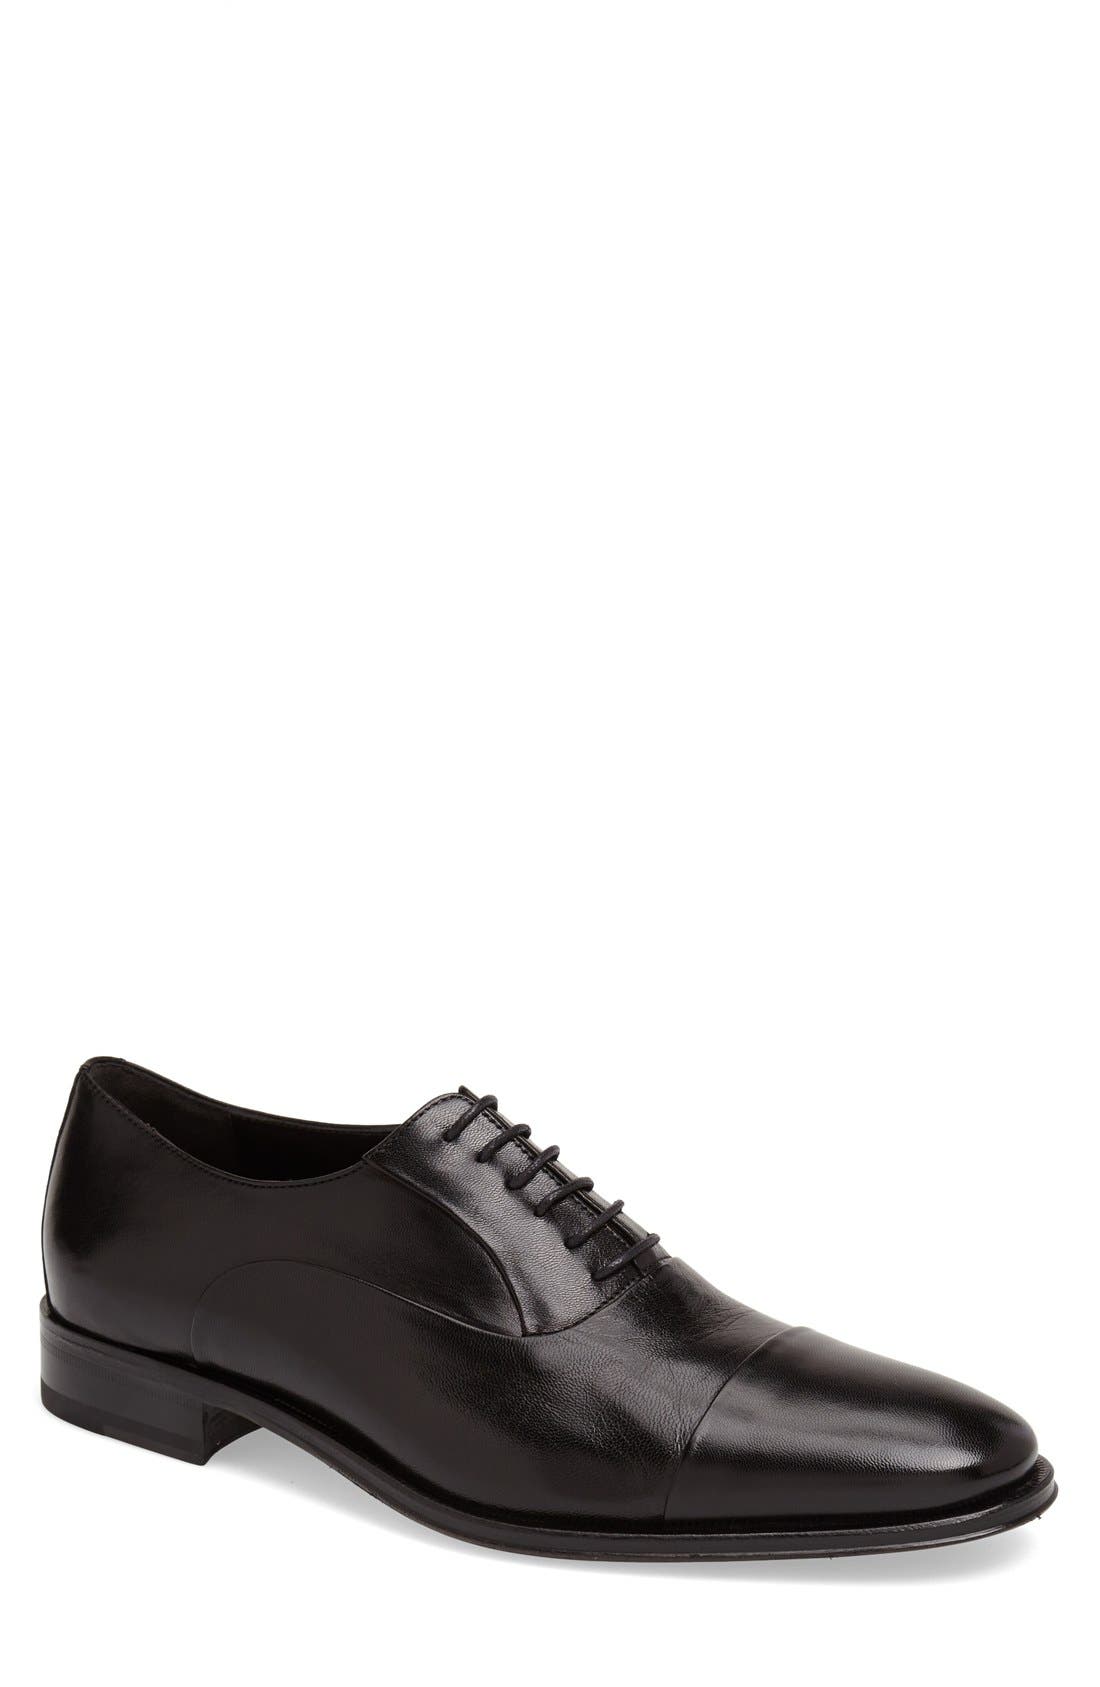 Men's Bruno Magli Shoes | Nordstrom